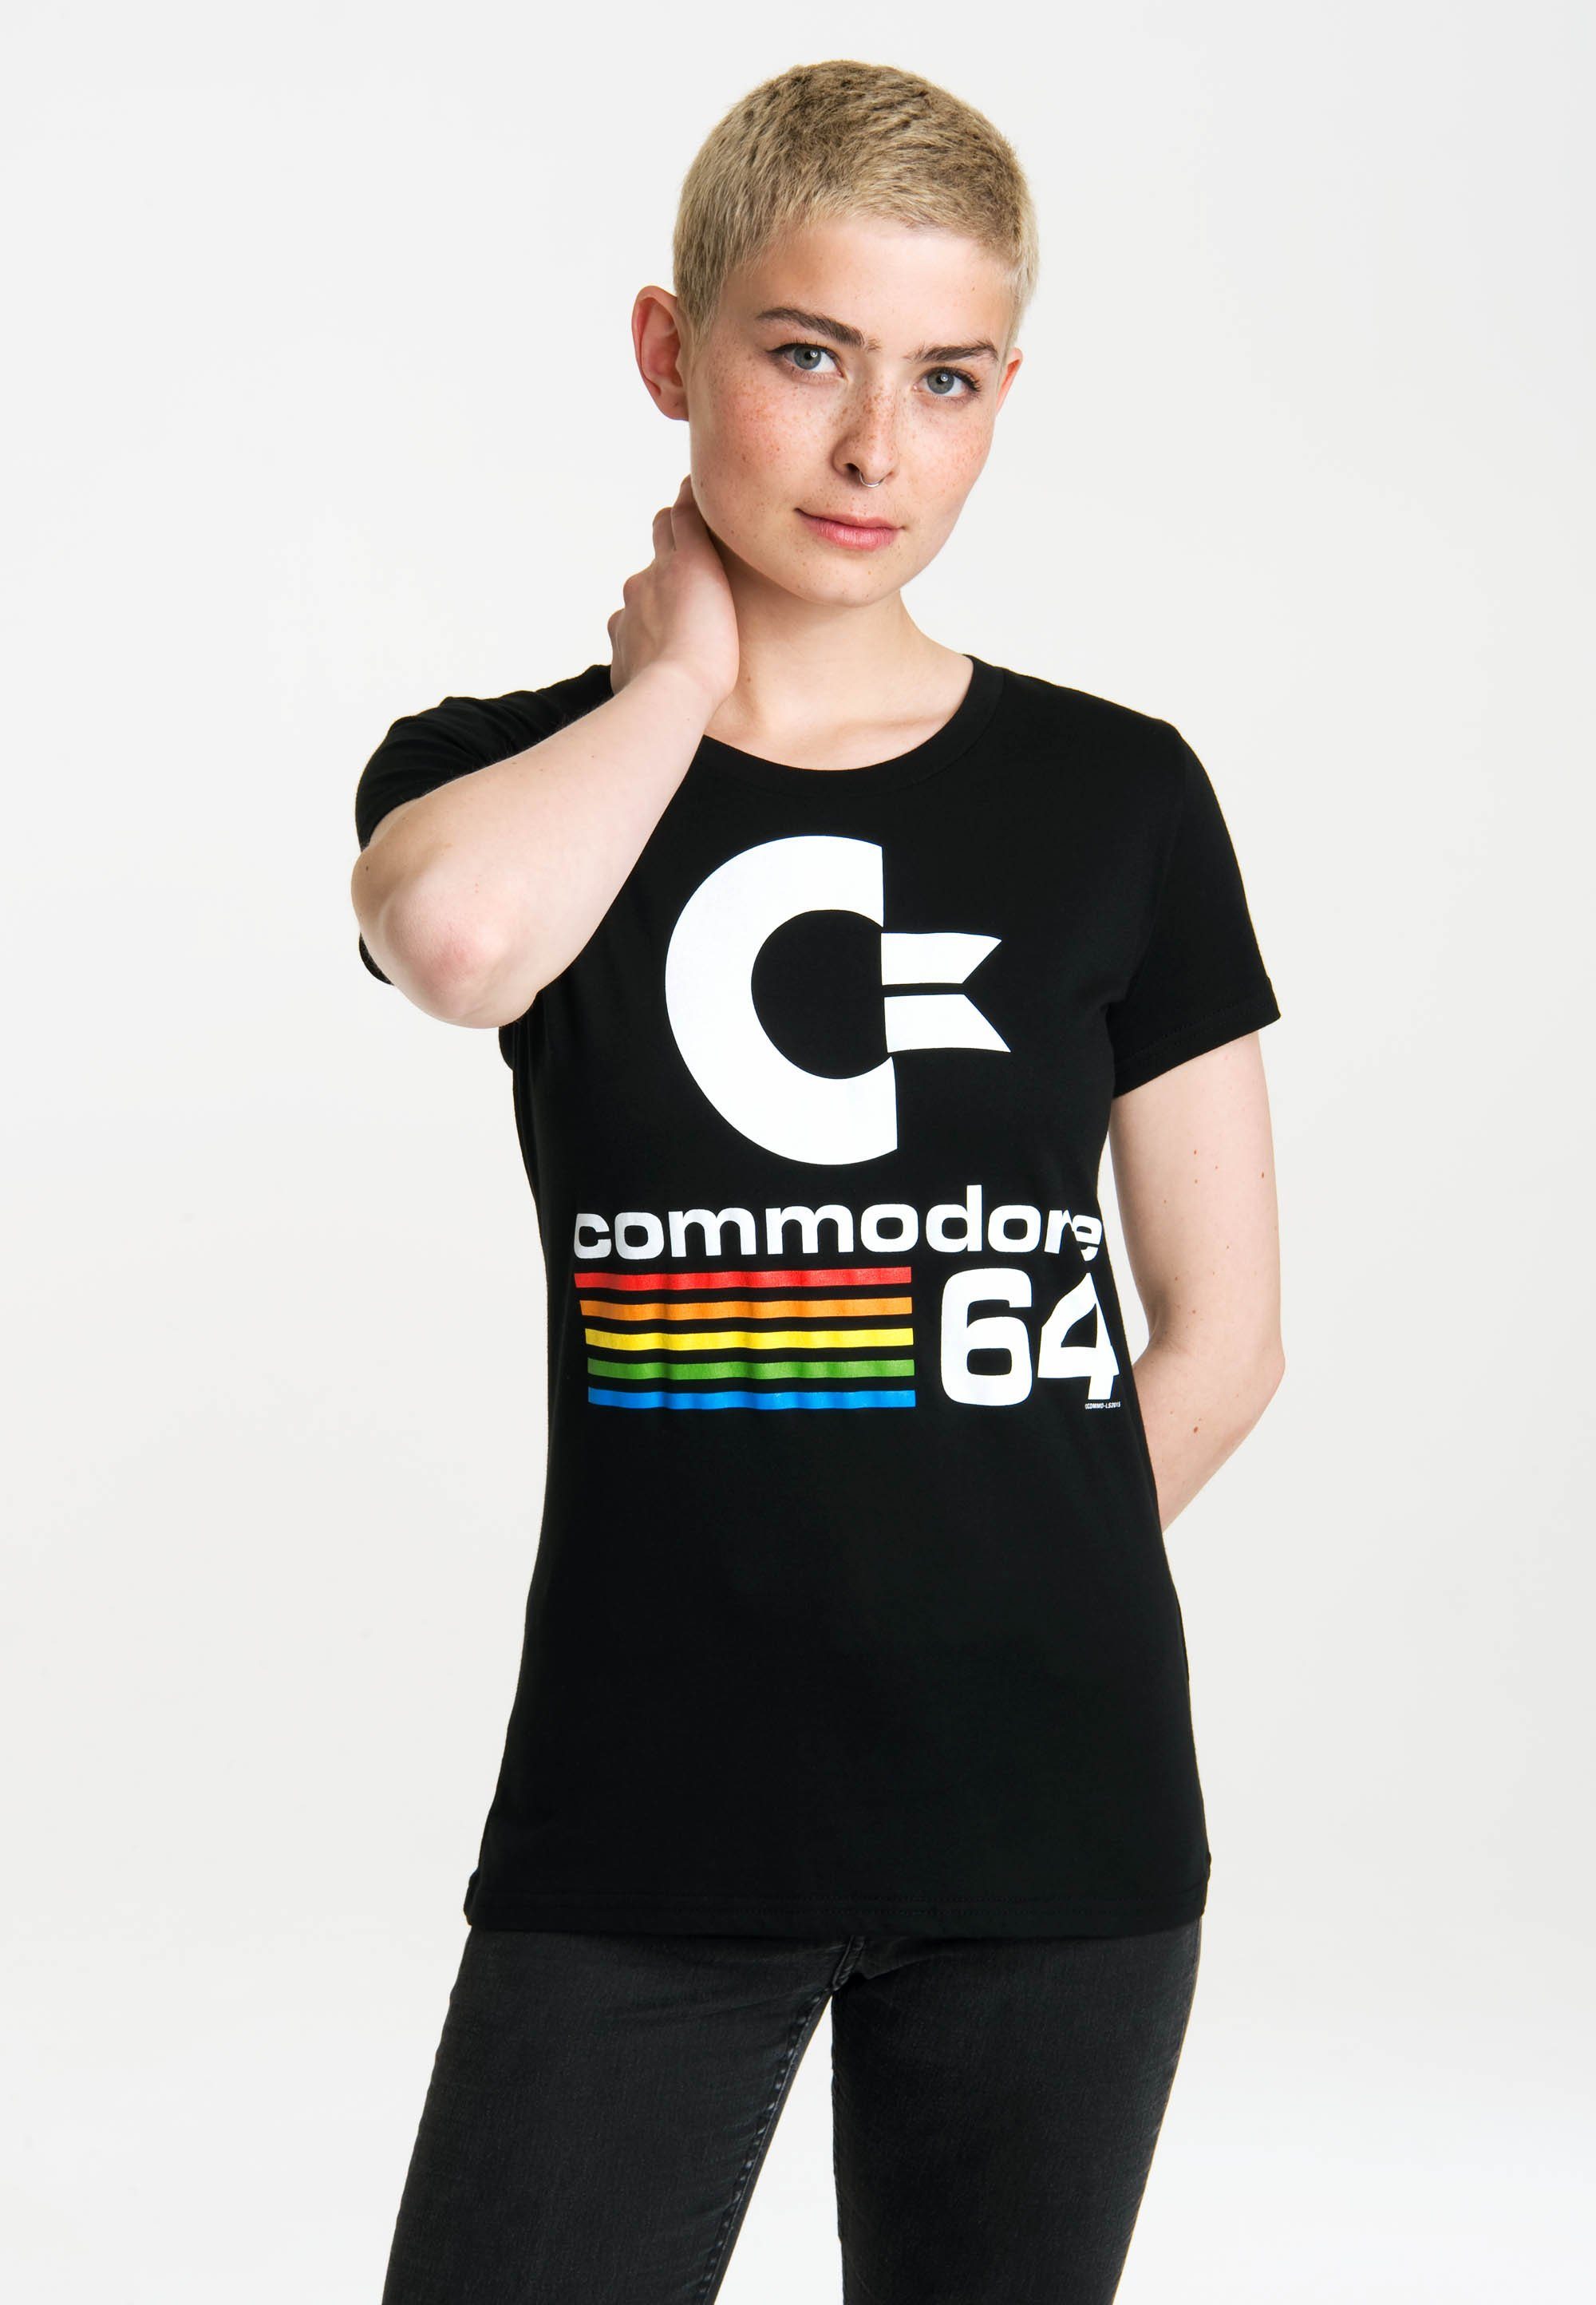 C64 64-Logo Commodore T-Shirt LOGOSHIRT Commodore mit Logo